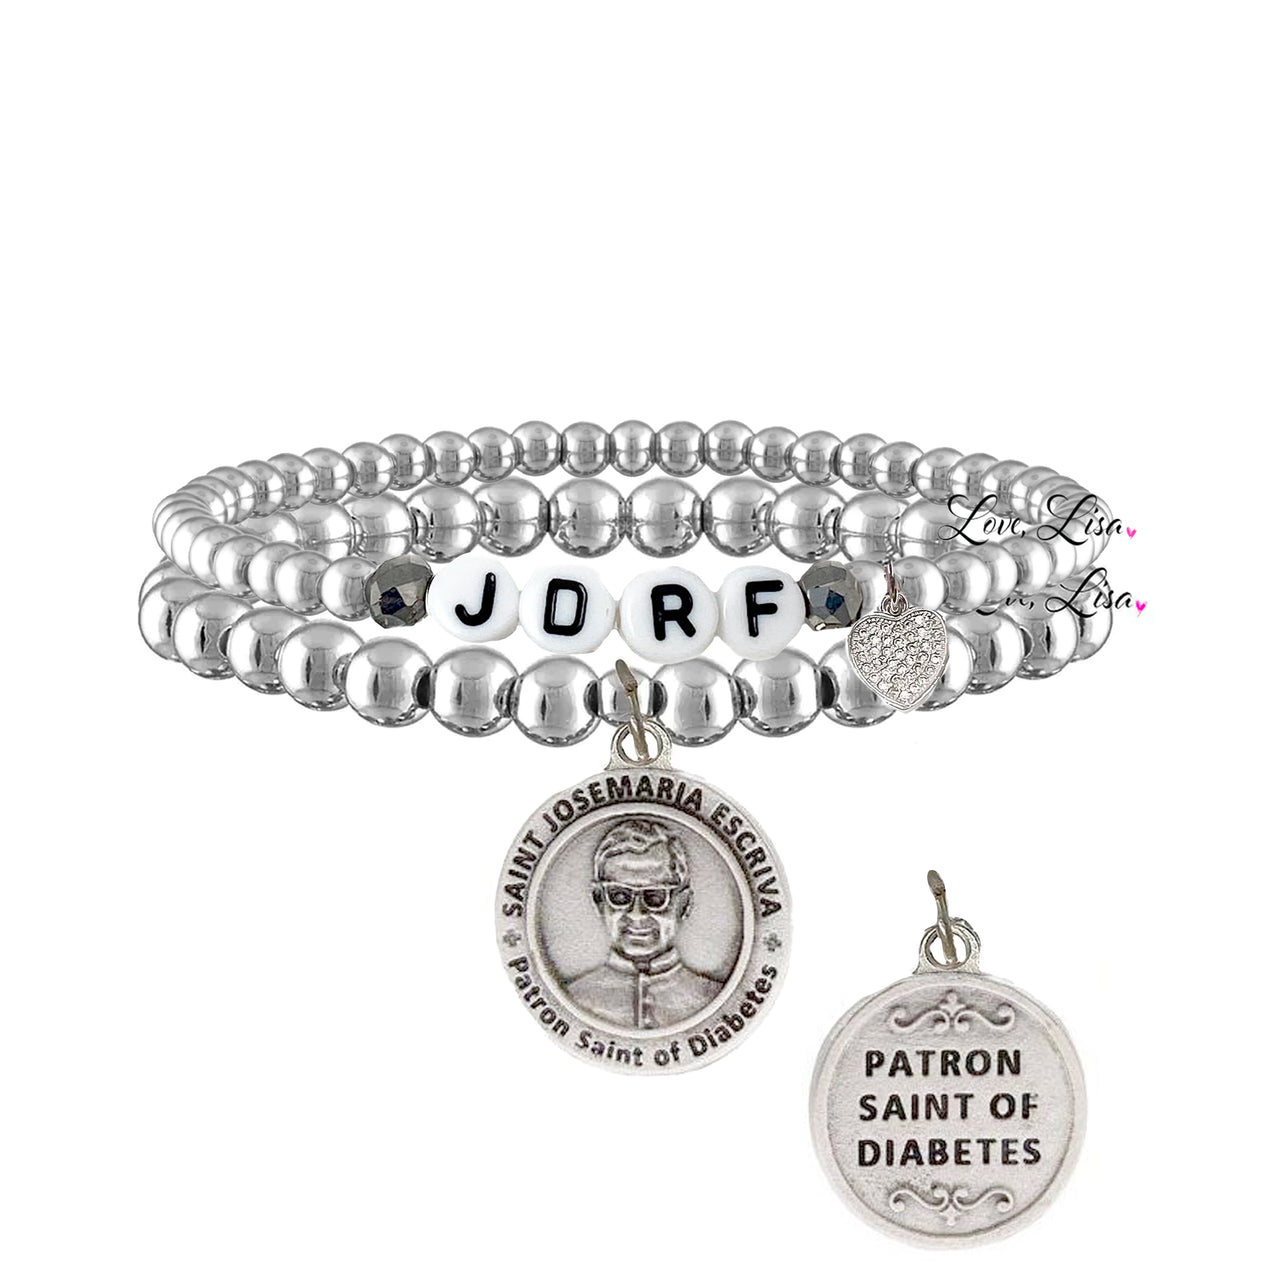 JDRF Awareness & Patron Saint Of Diabetes Bracelets